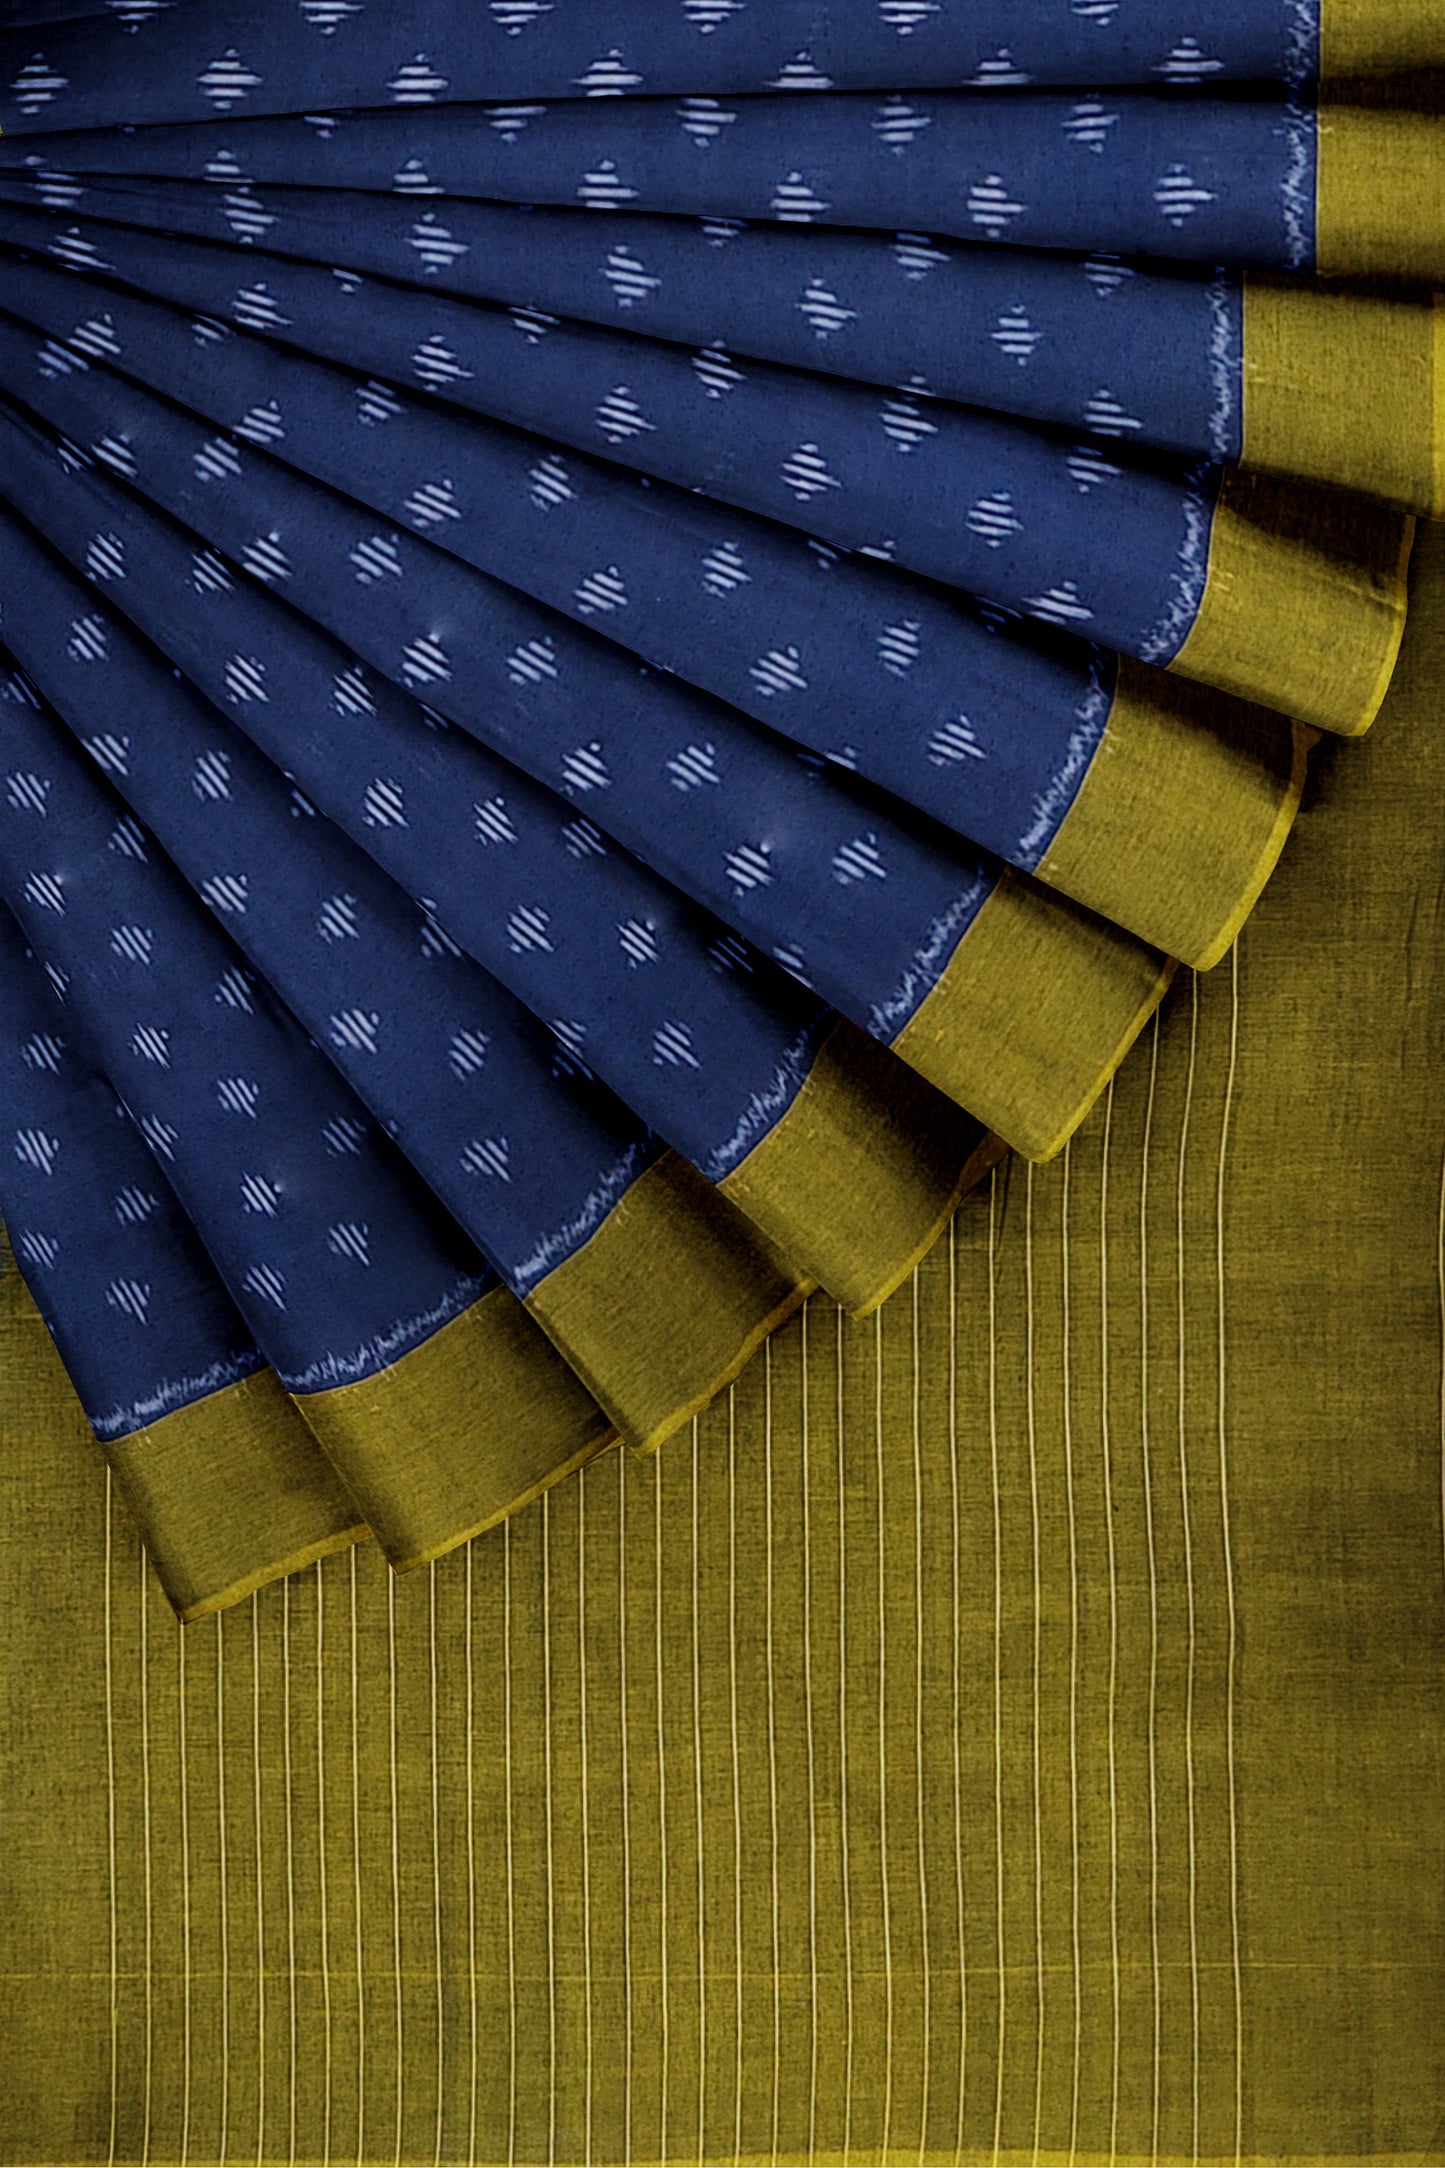 Ikat Mercerised Cotton Saree - Indigo Blue body with Mehandi Green striped pallu and border